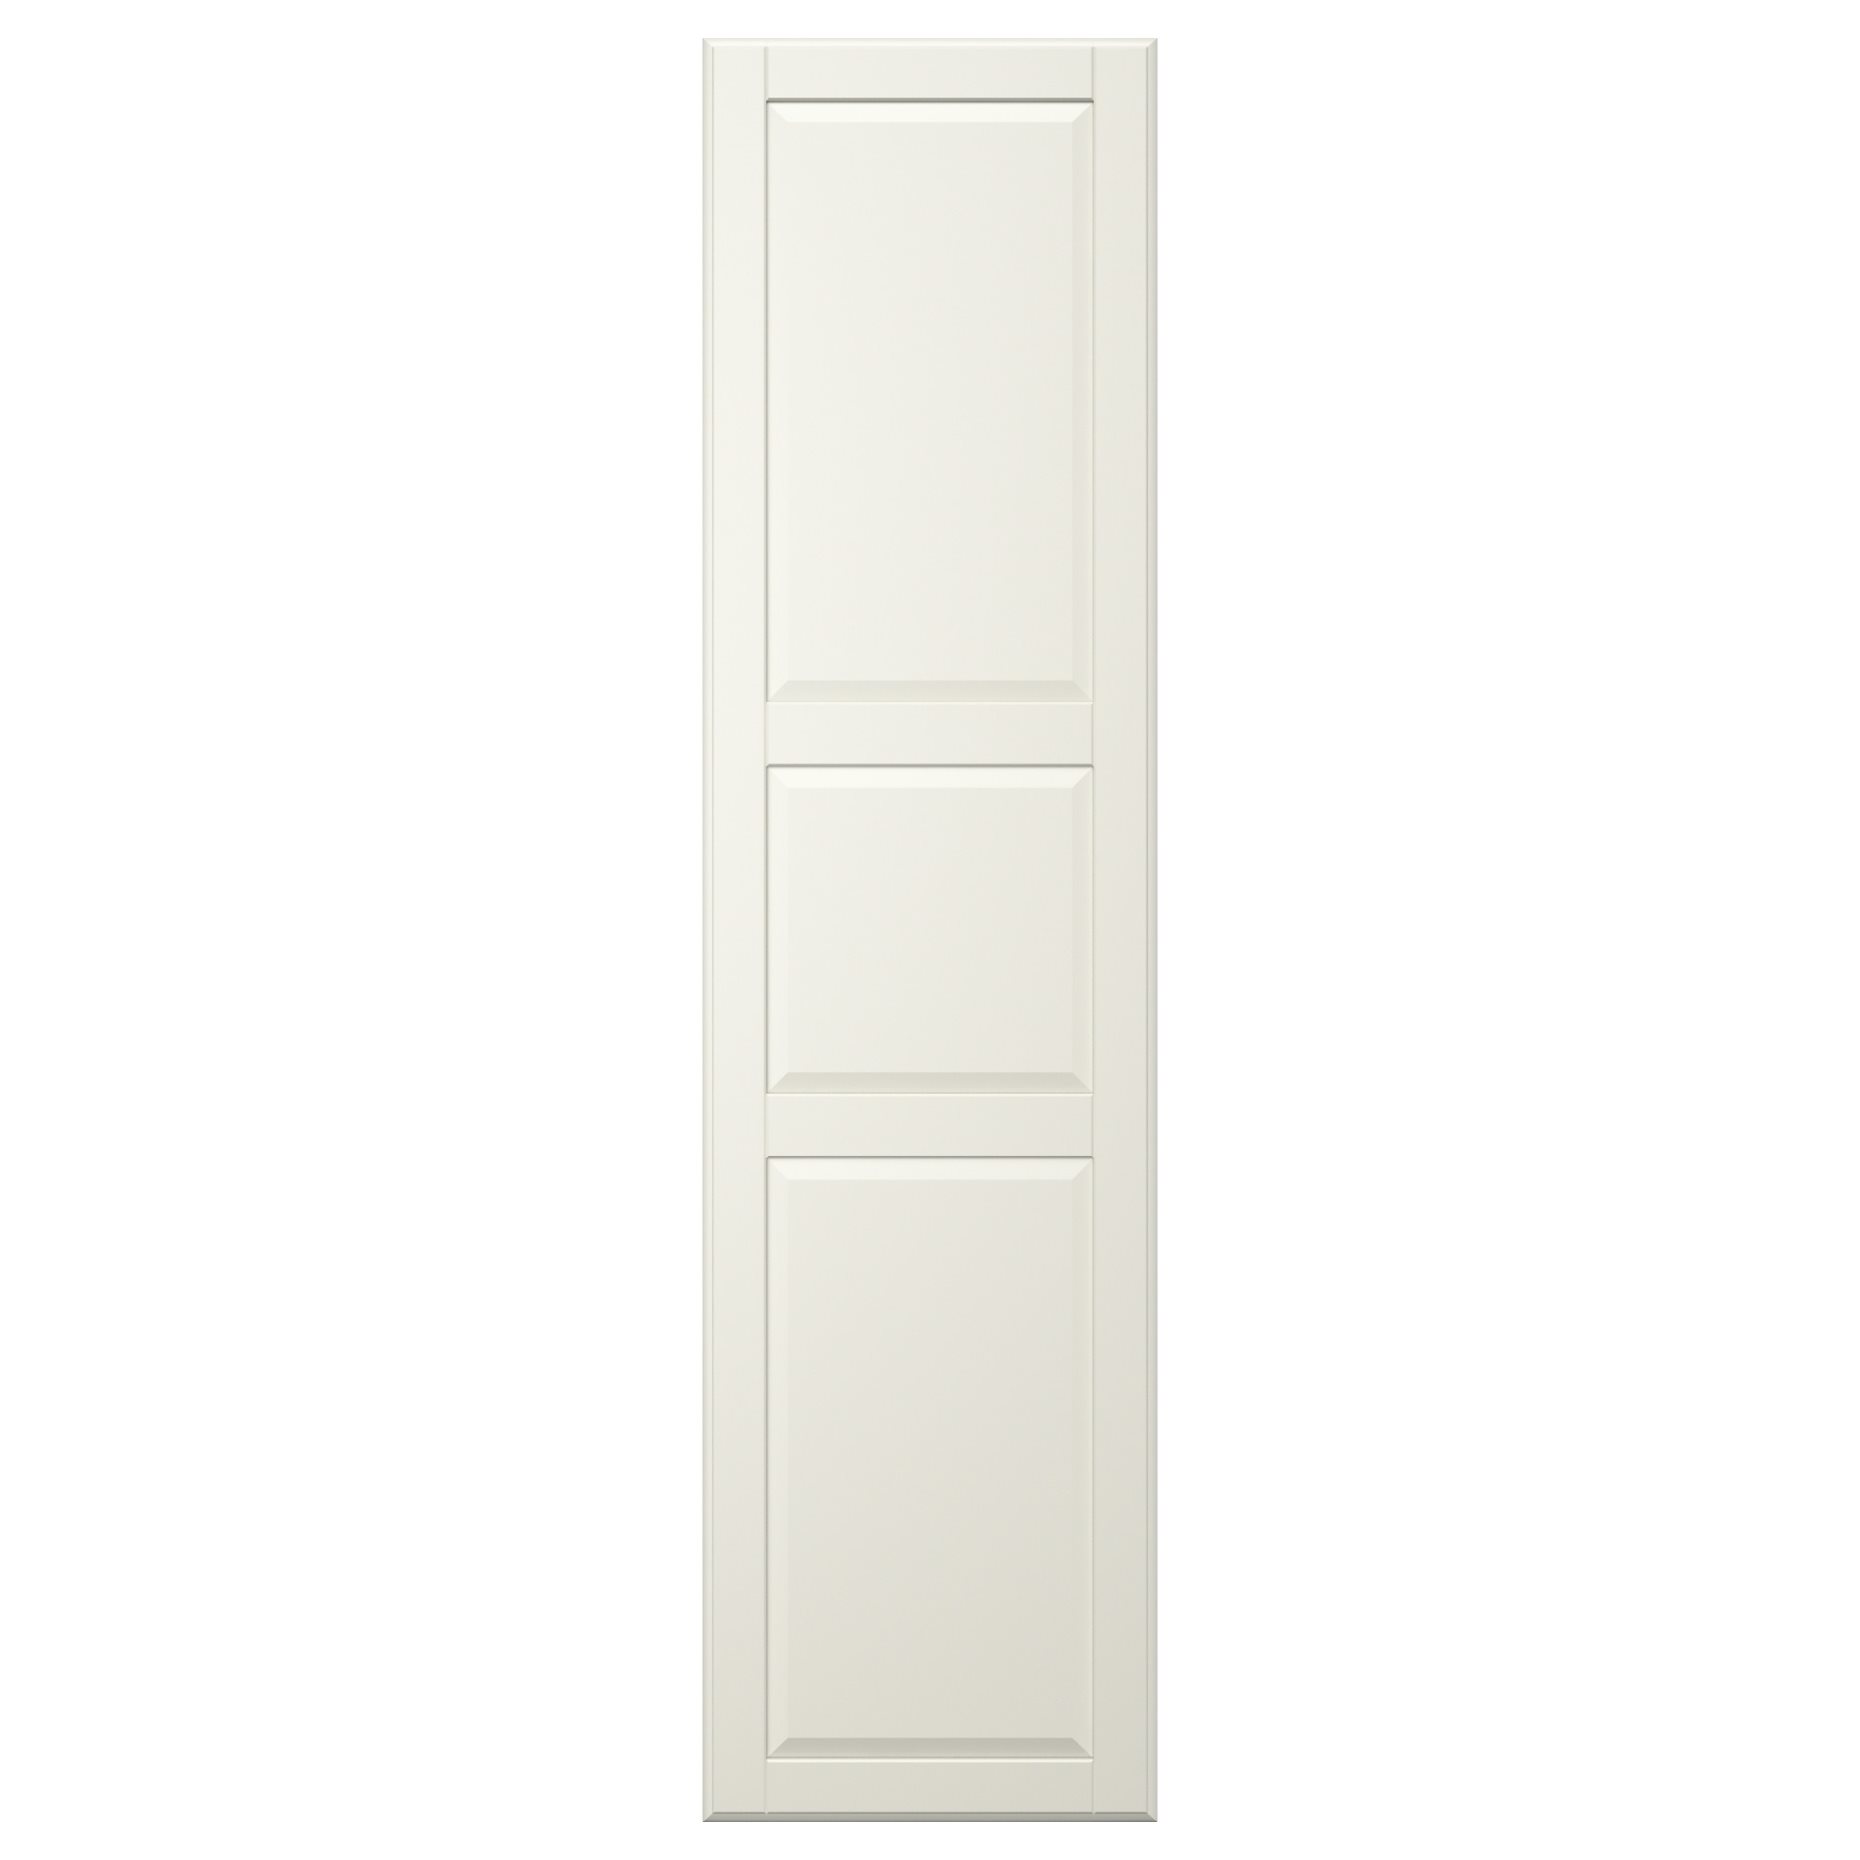 TYSSEDAL, door, 50x195 cm, 902.981.24